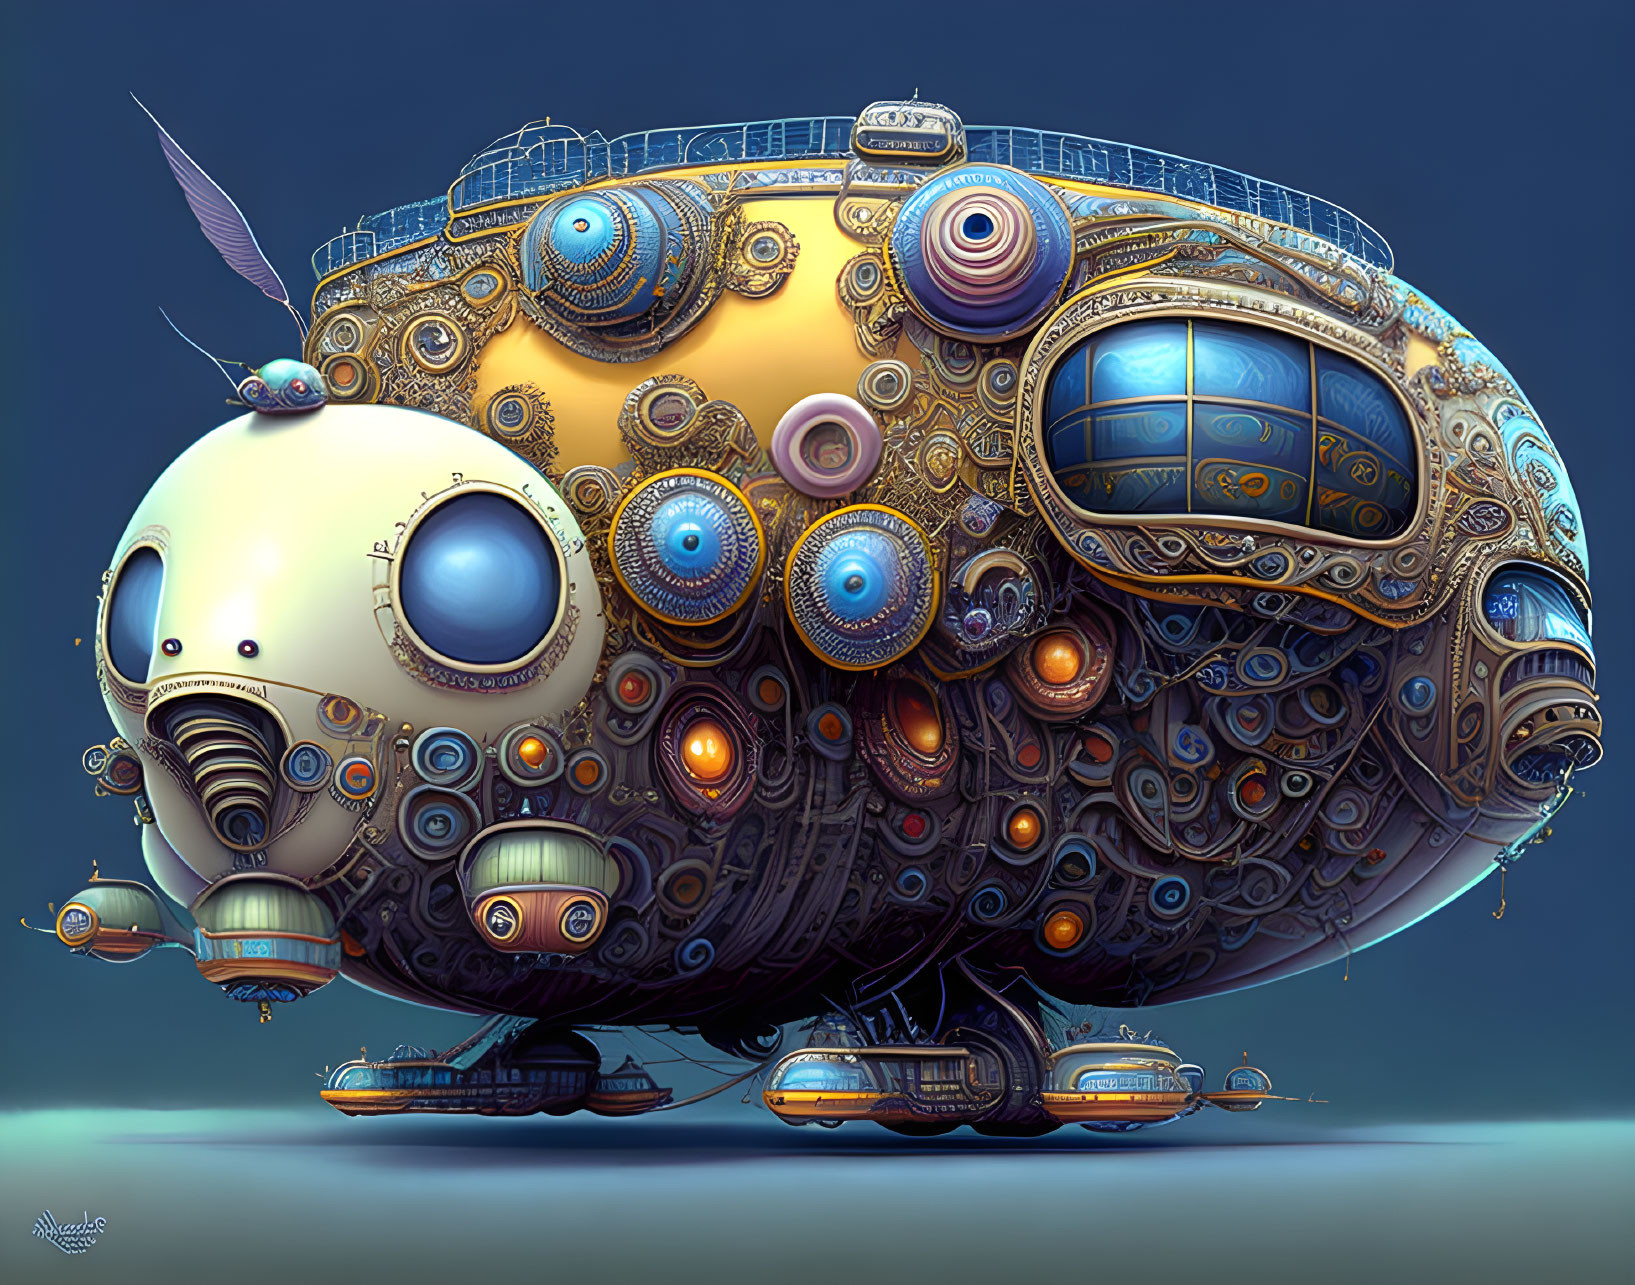 Fantastical airship illustration with steampunk submarine theme